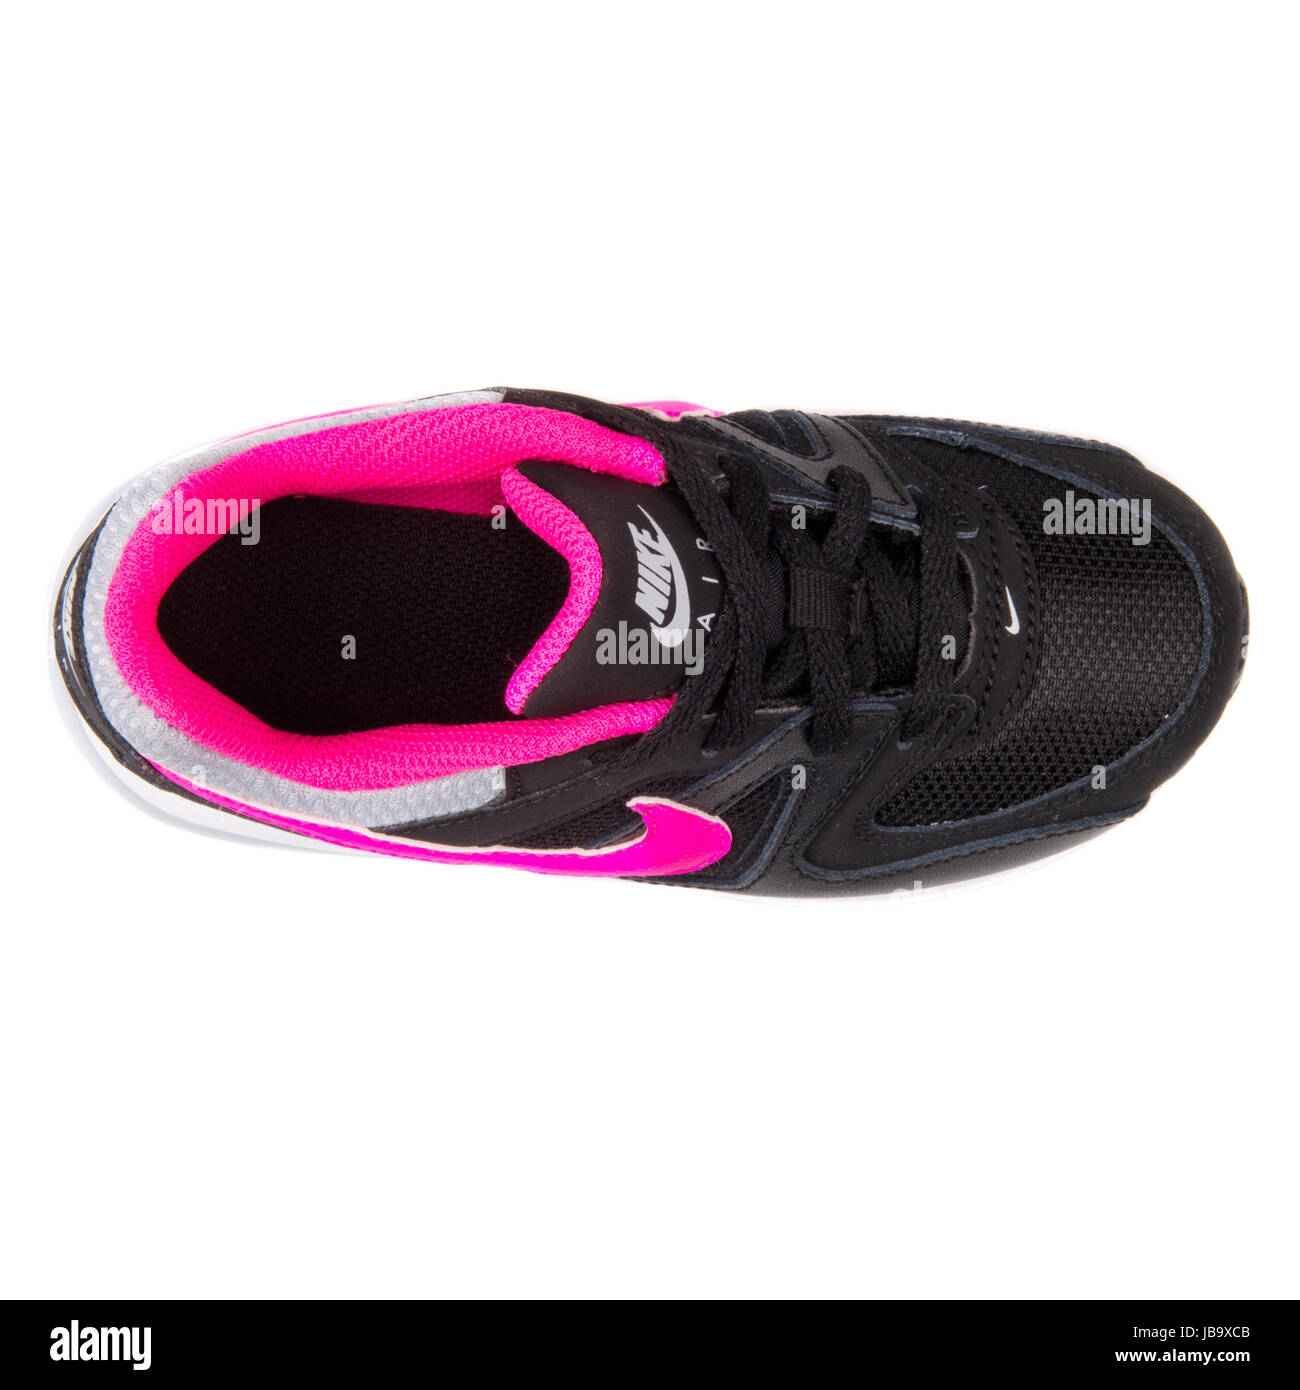 Nike Air Max Command (TD) nero e rosa Bambini Sport Sneakers - 412232-065  Foto stock - Alamy